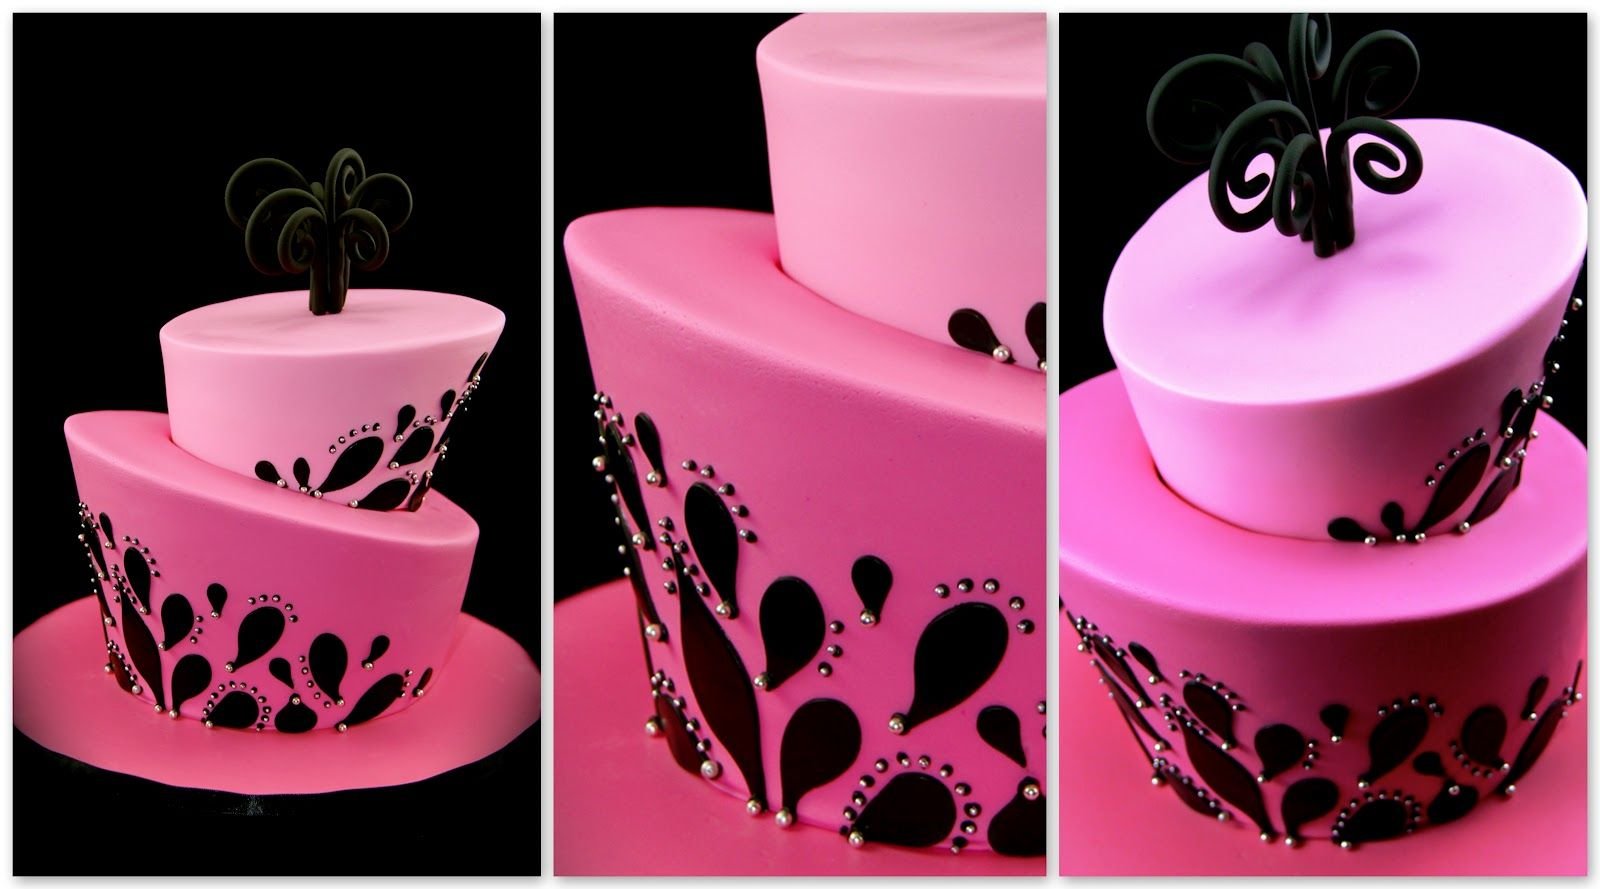 Черно розовый торт. Торт черно розовый. Торт черный с розовым. Черно розовый торт для девочки. Яркий торт черно розовый.